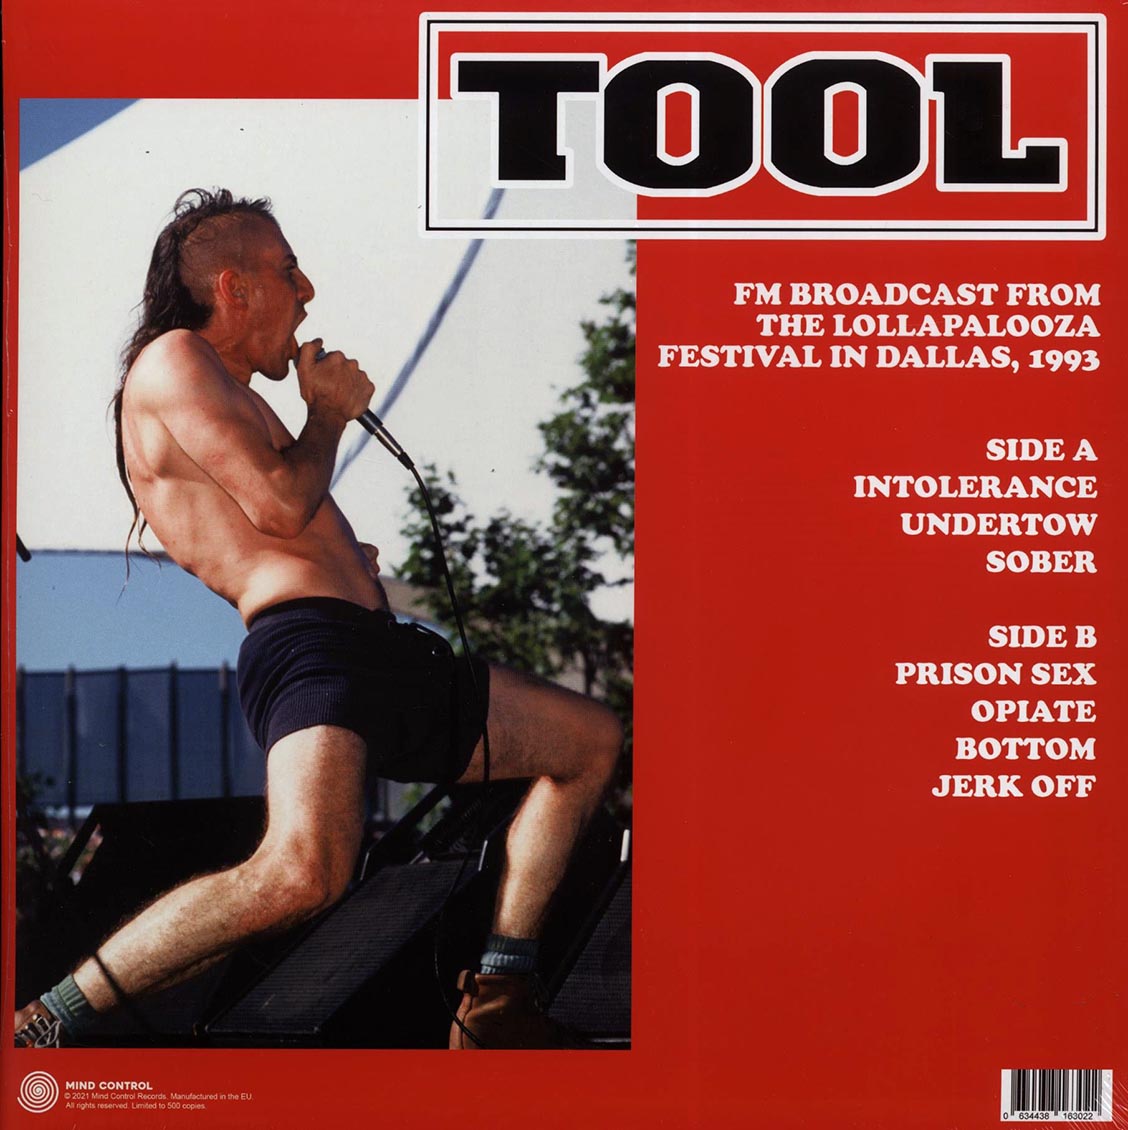 Tool - Live At The Starplex Amphitheatre, Dallas, TX August 1st 1993 FM Broadcast (ltd. 500 copies made) - Vinyl LP, LP